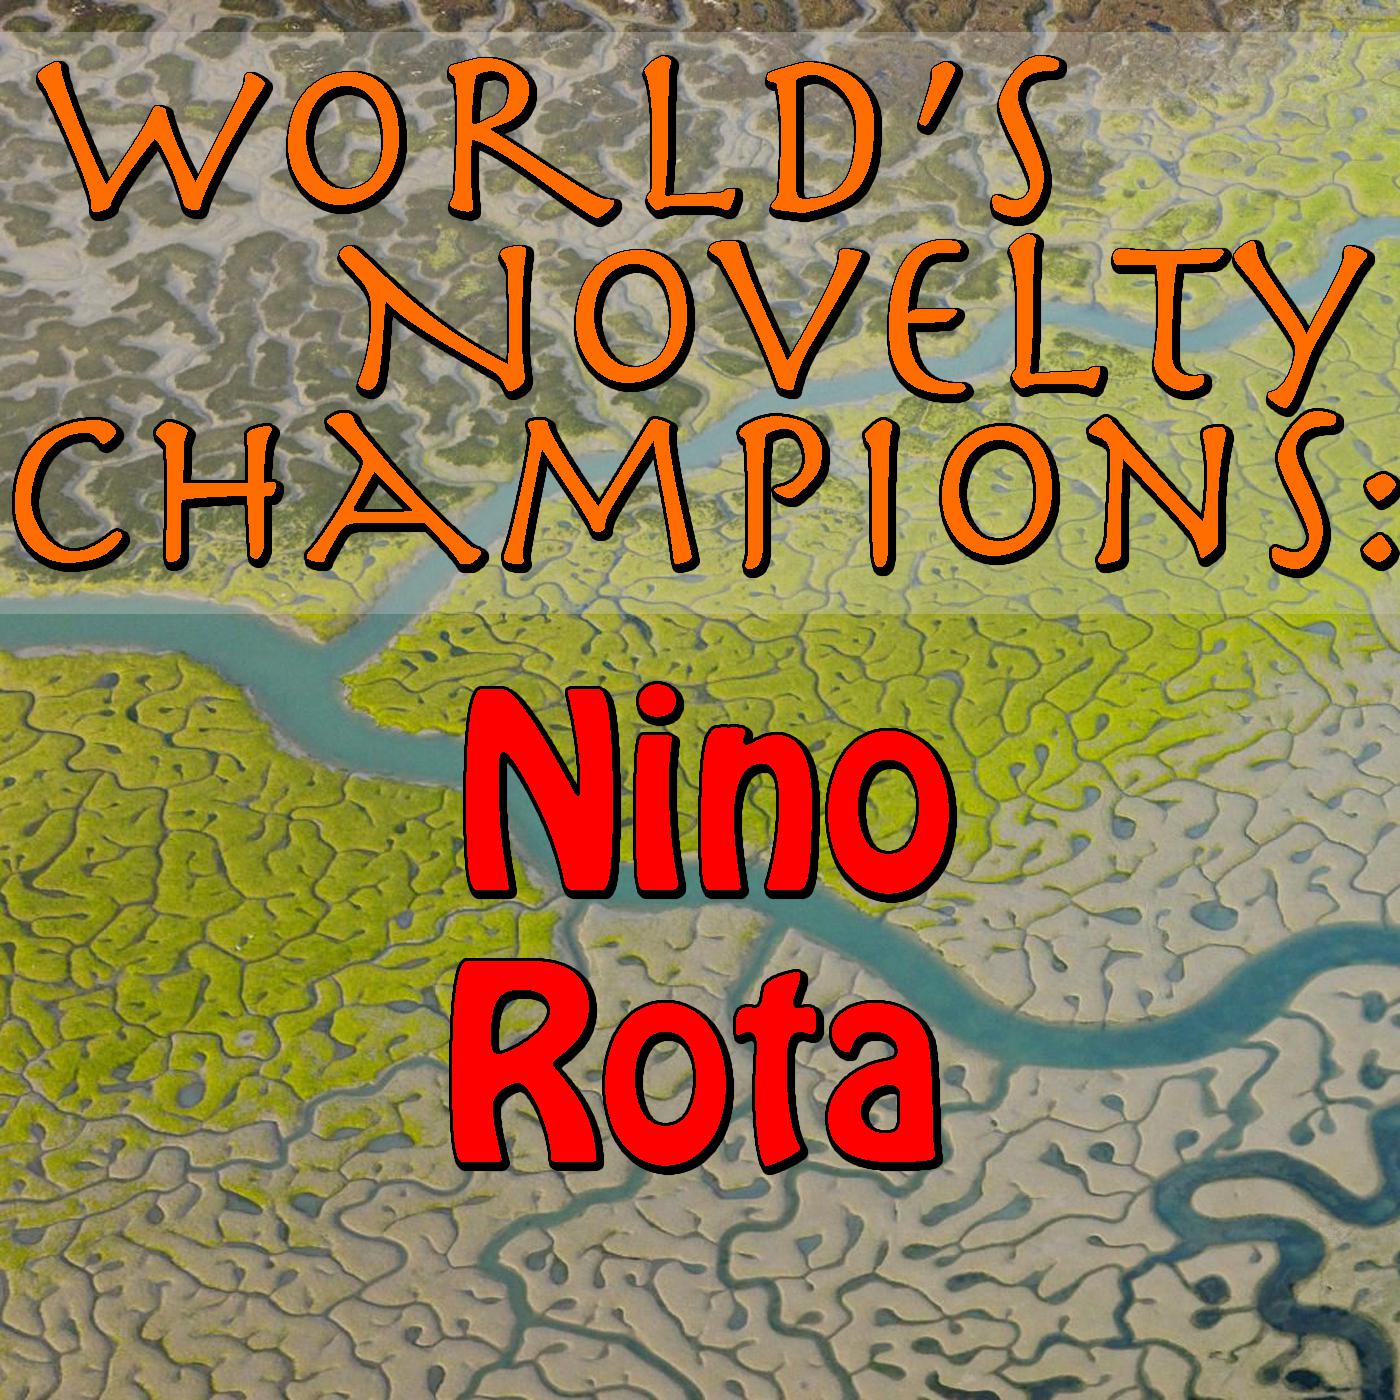 World's Novelty Champions: Nino Rota